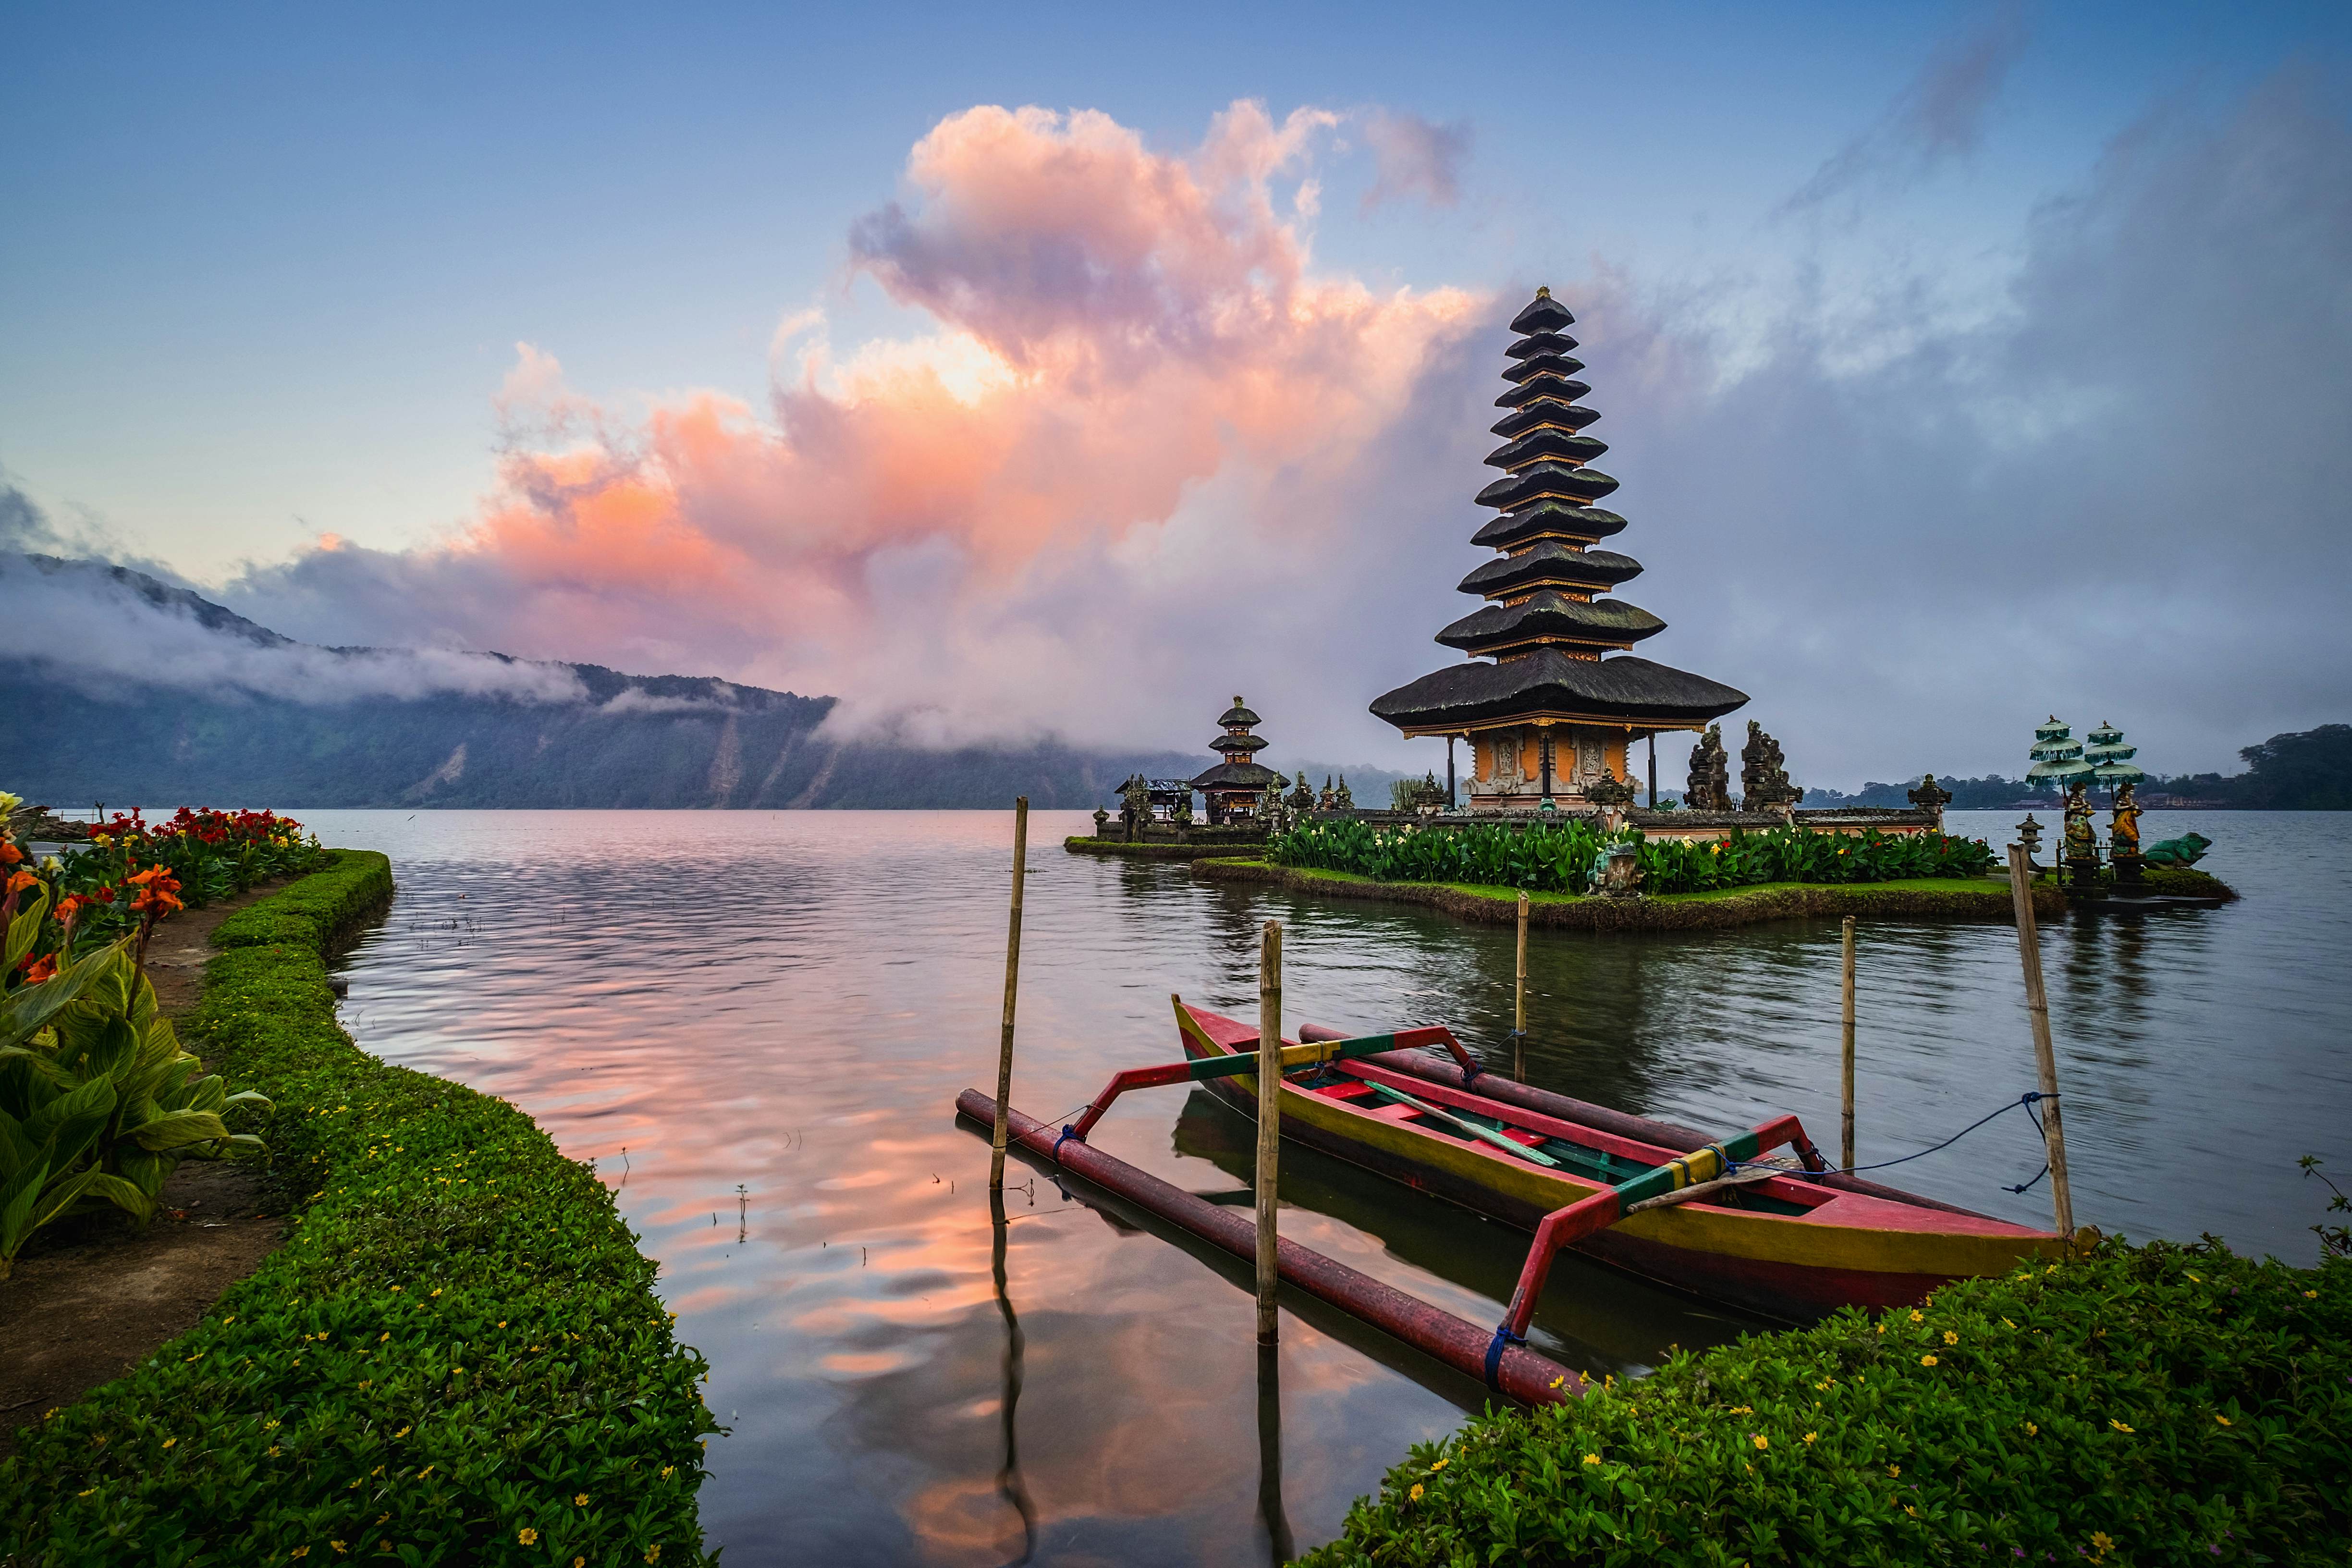 myg Bliv klar krans Bali travel - Lonely Planet | Indonesia, Asia